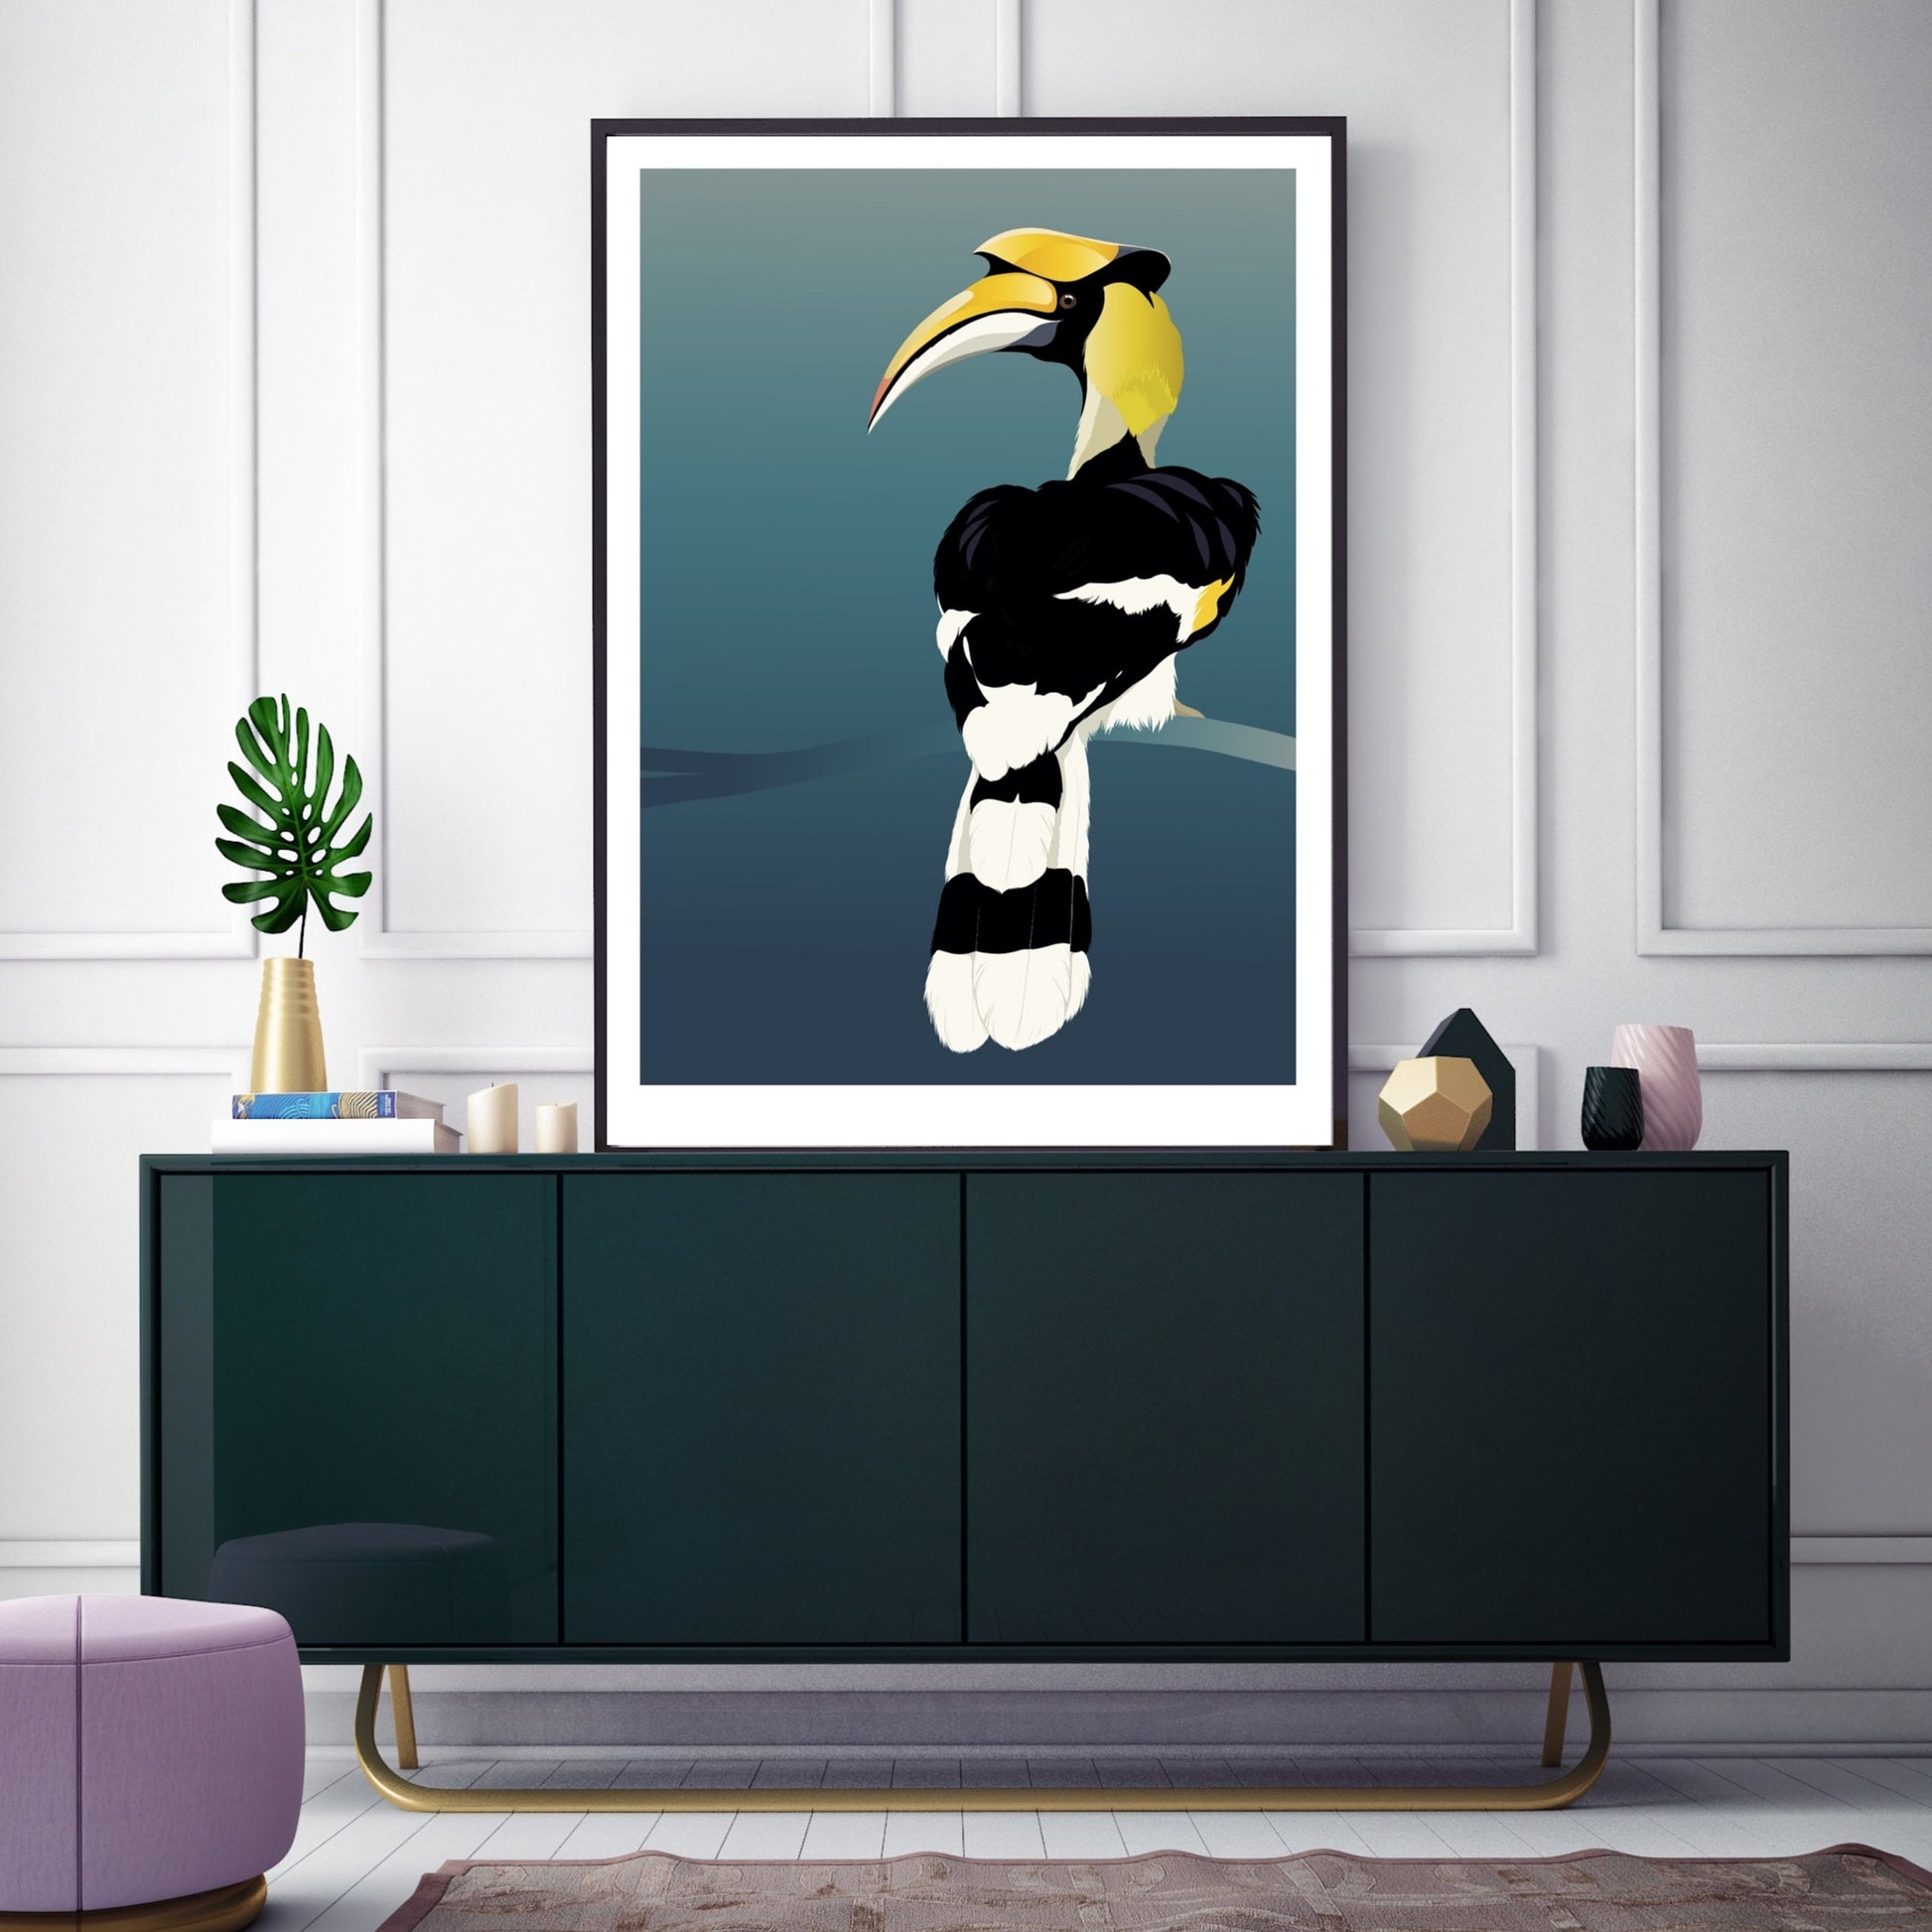 Framed art print of the Hornbill bird by Hansby Design New Zealand